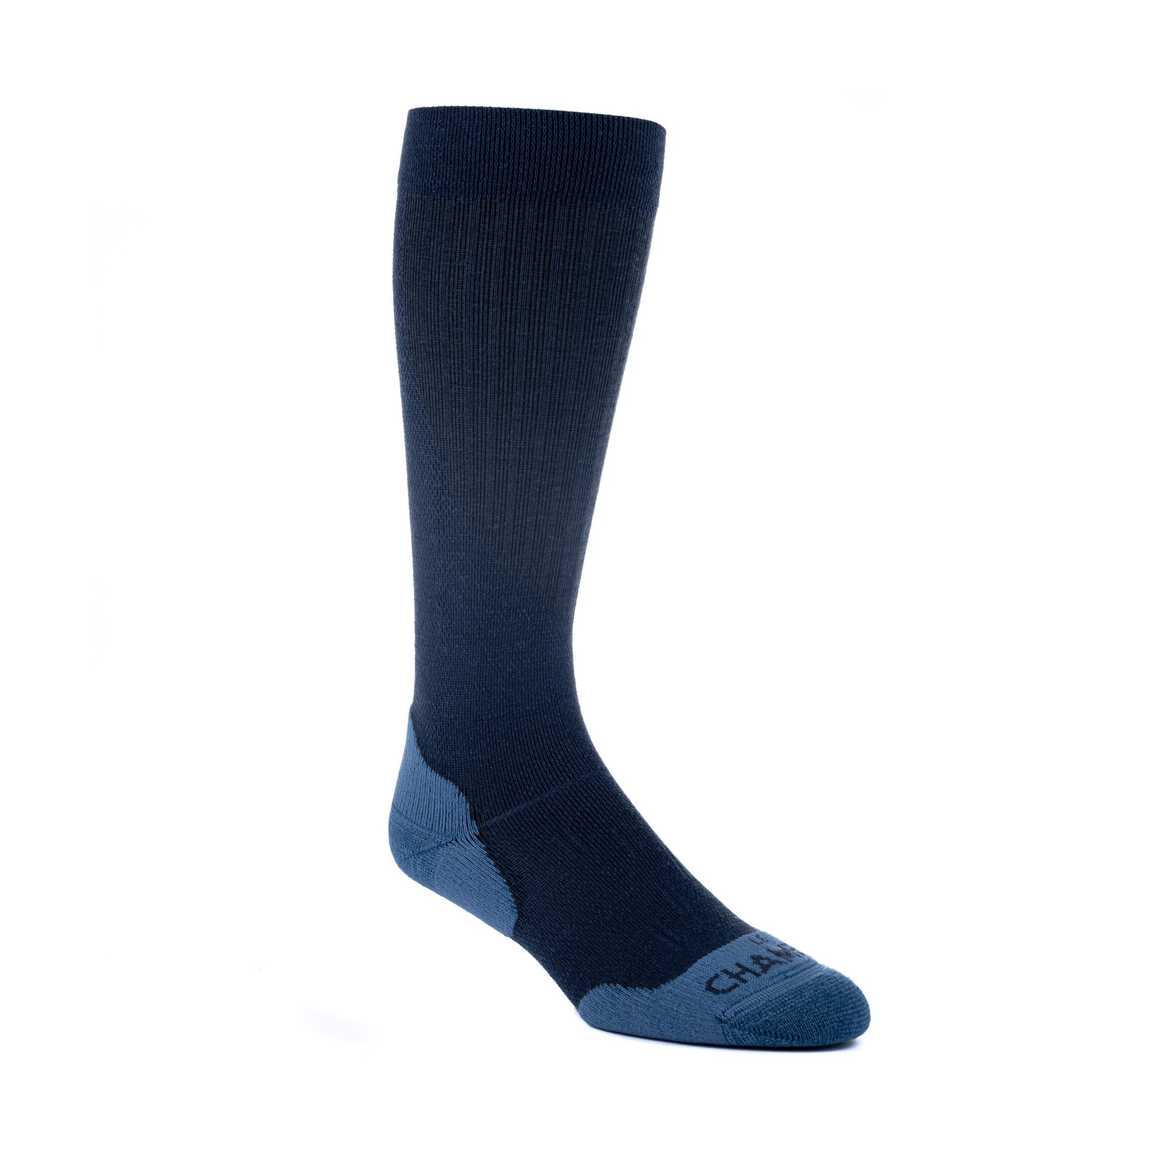 Le Chameau Iris Socks - Bleu Fonce